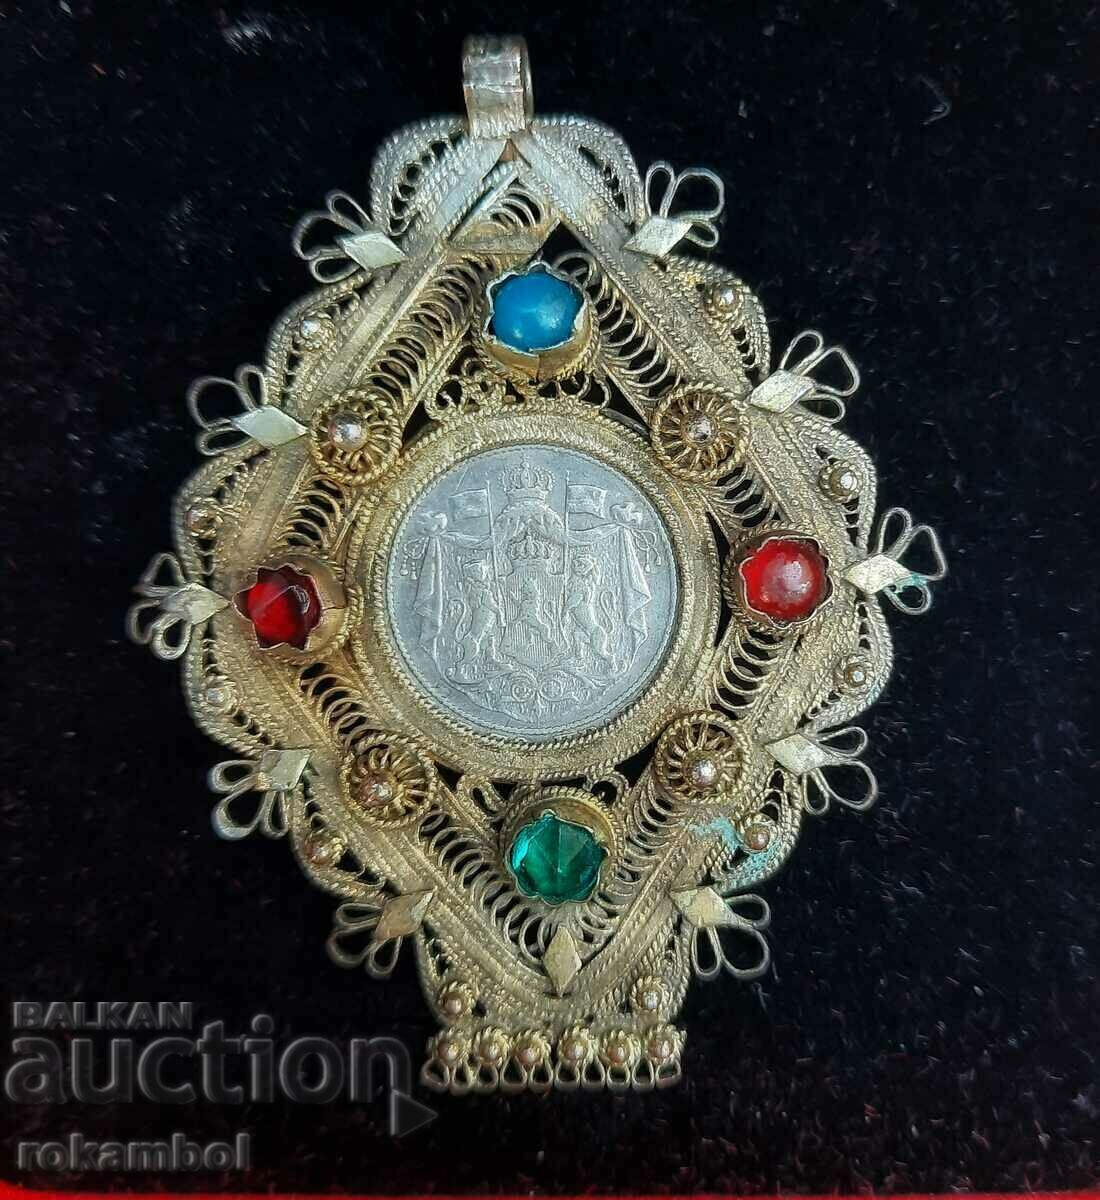 Antique silver jewelry with mercury gilding, filigree